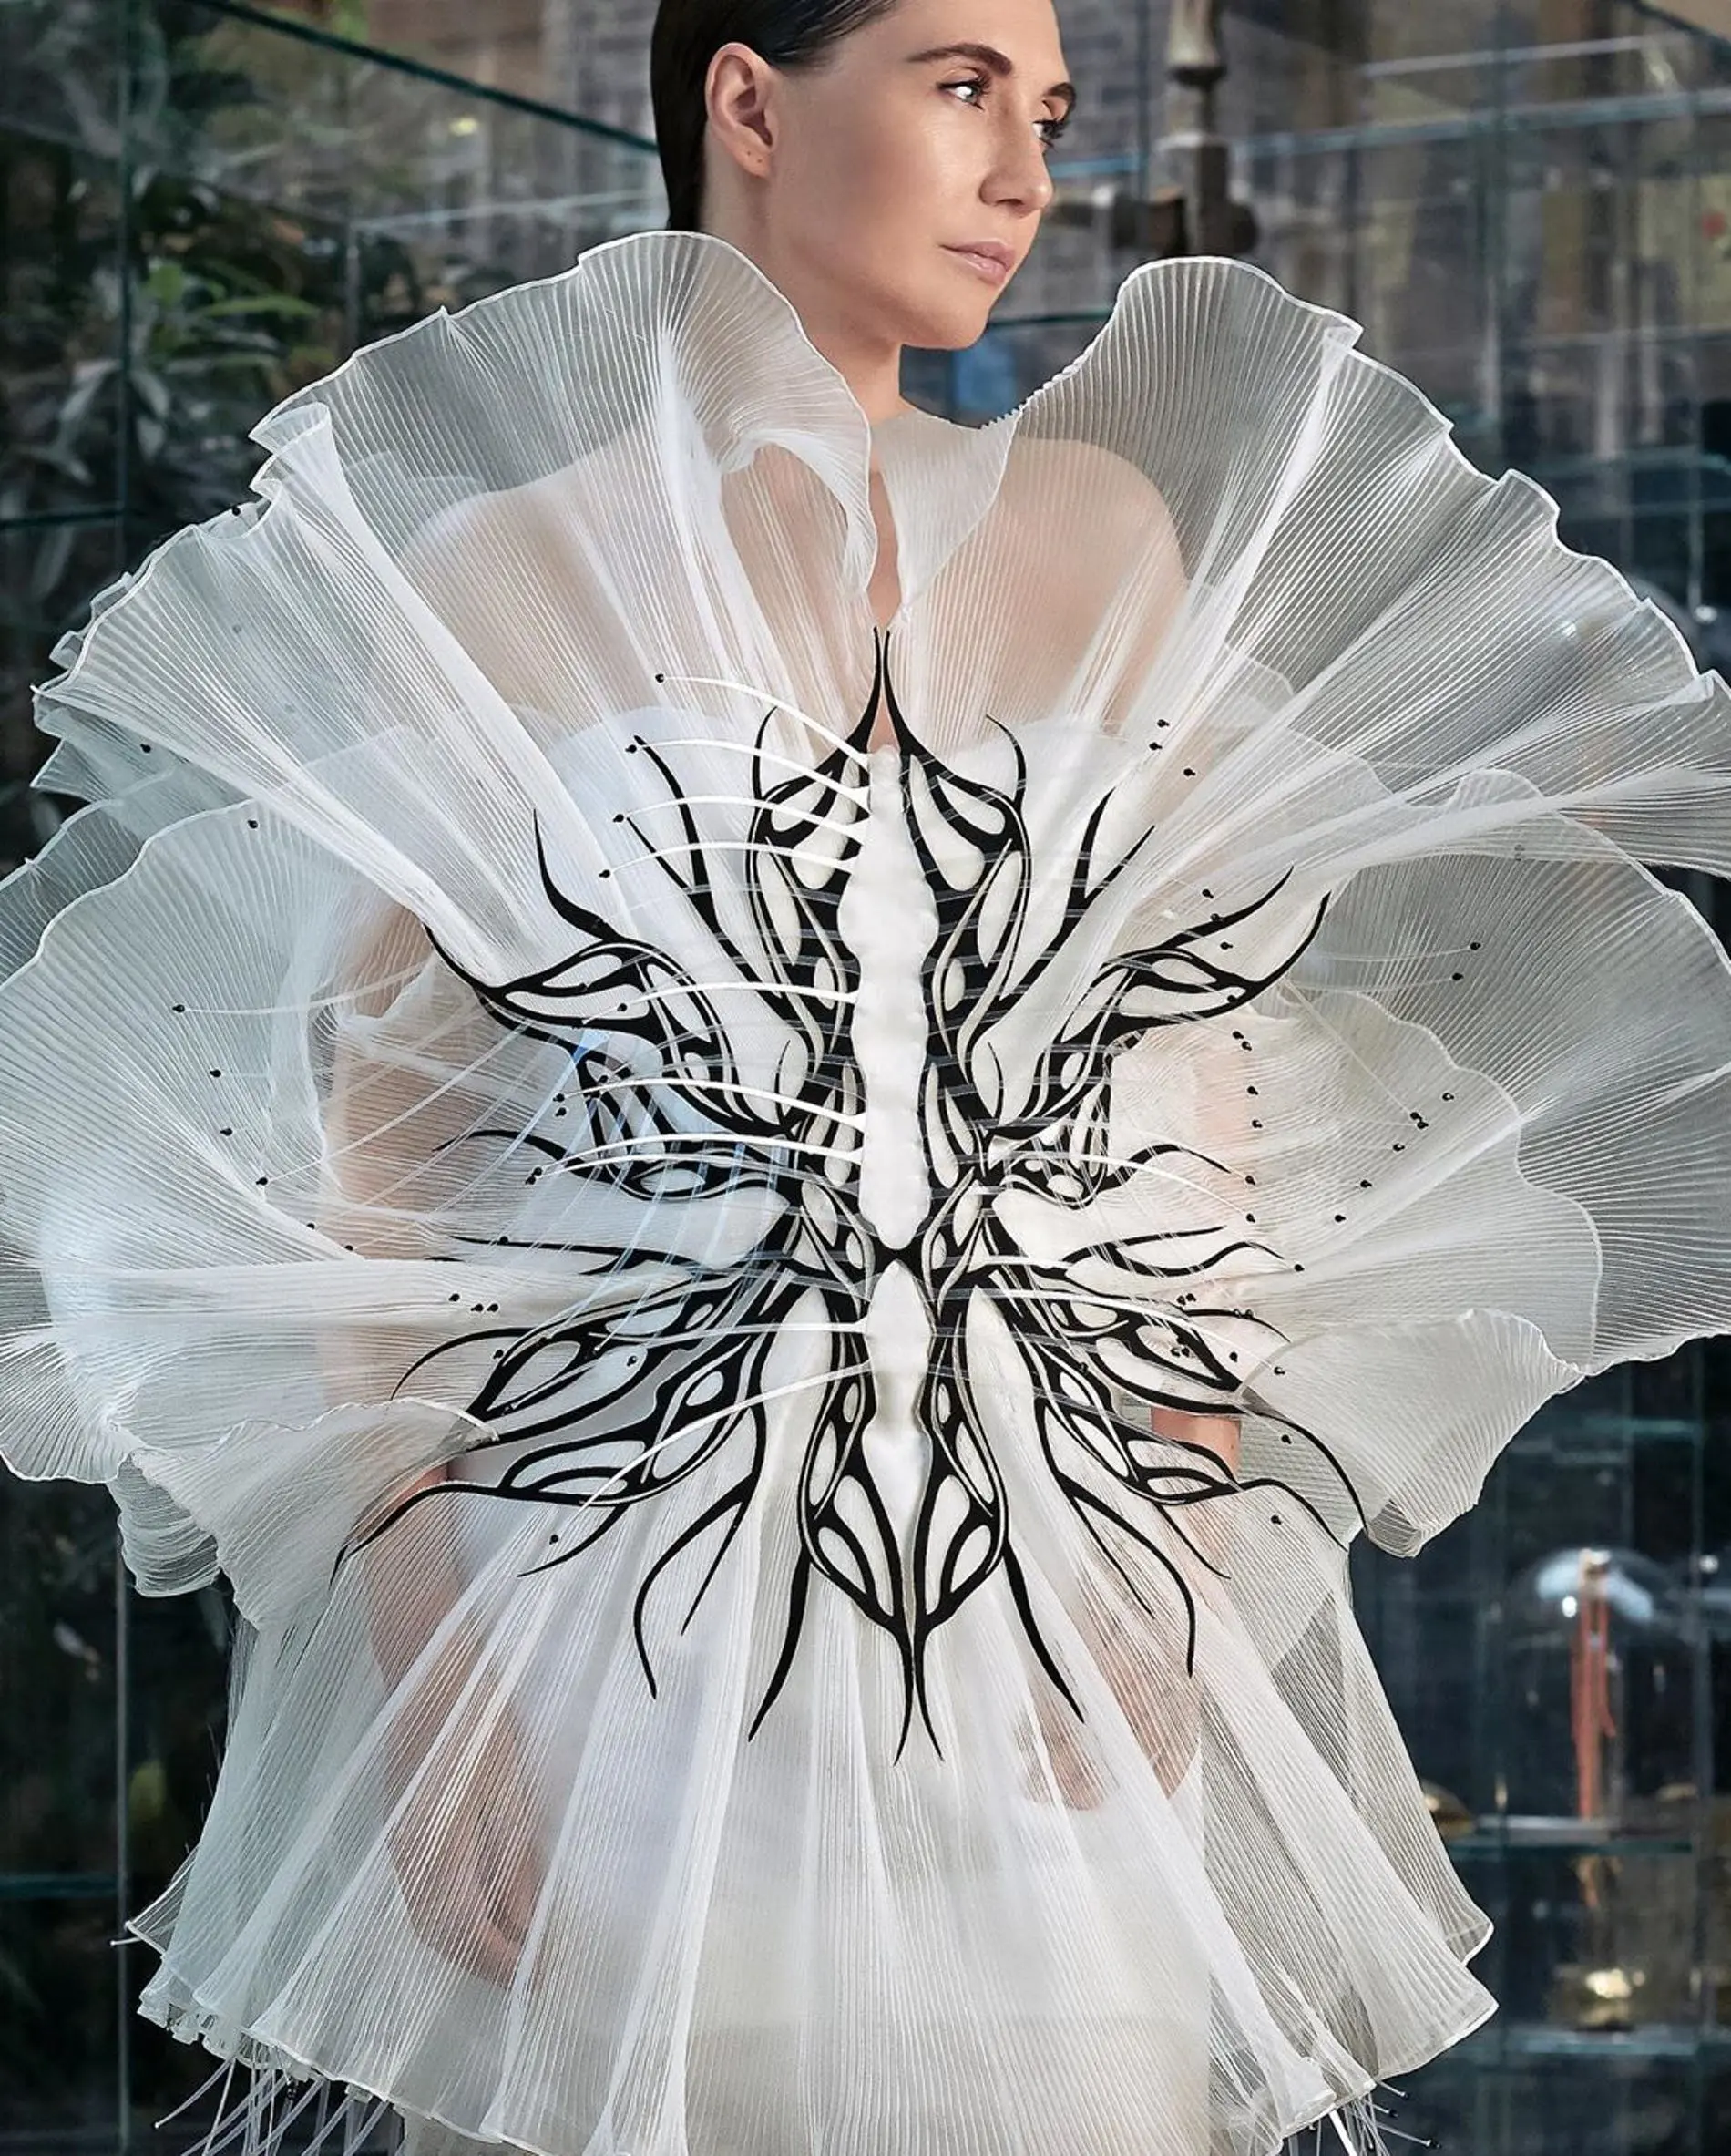 iris van herpen sculpts 'kinetic couture' that moves as models